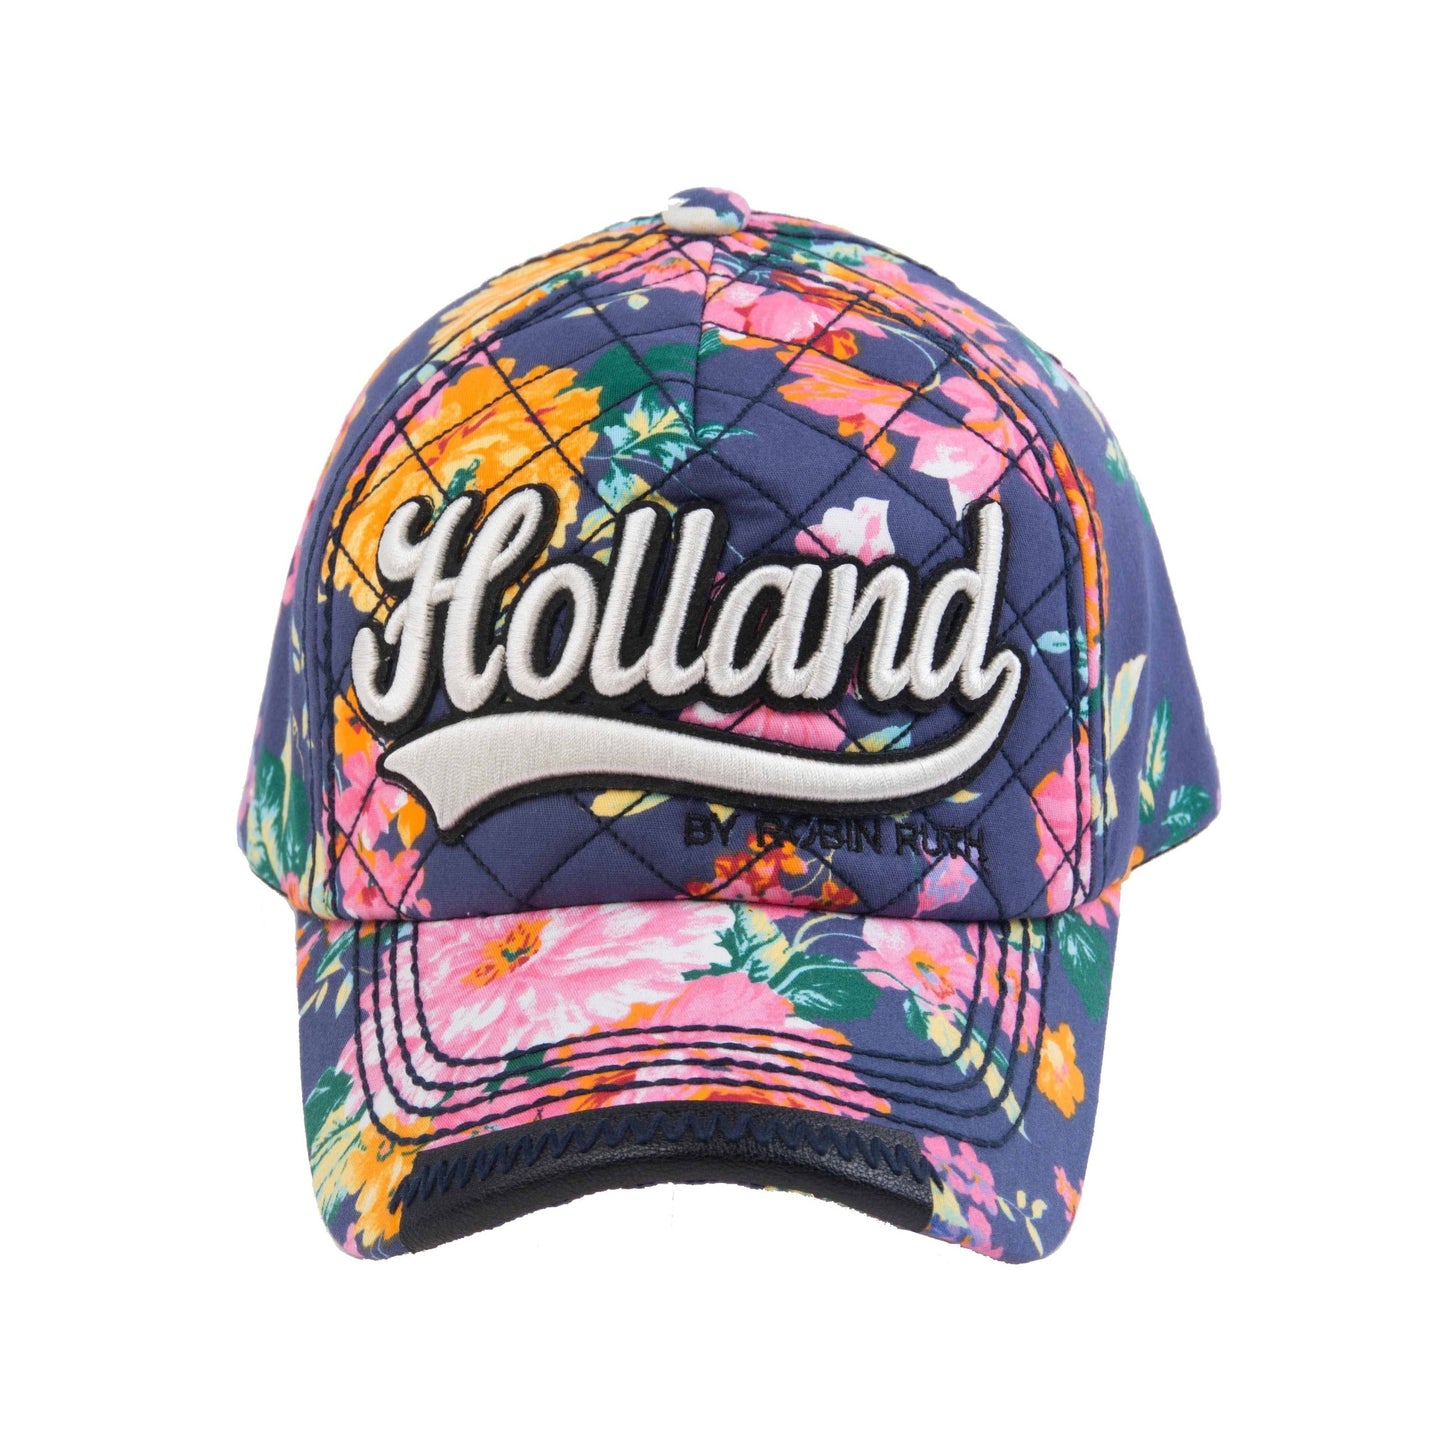 J.J. - Flowers cap - Holland